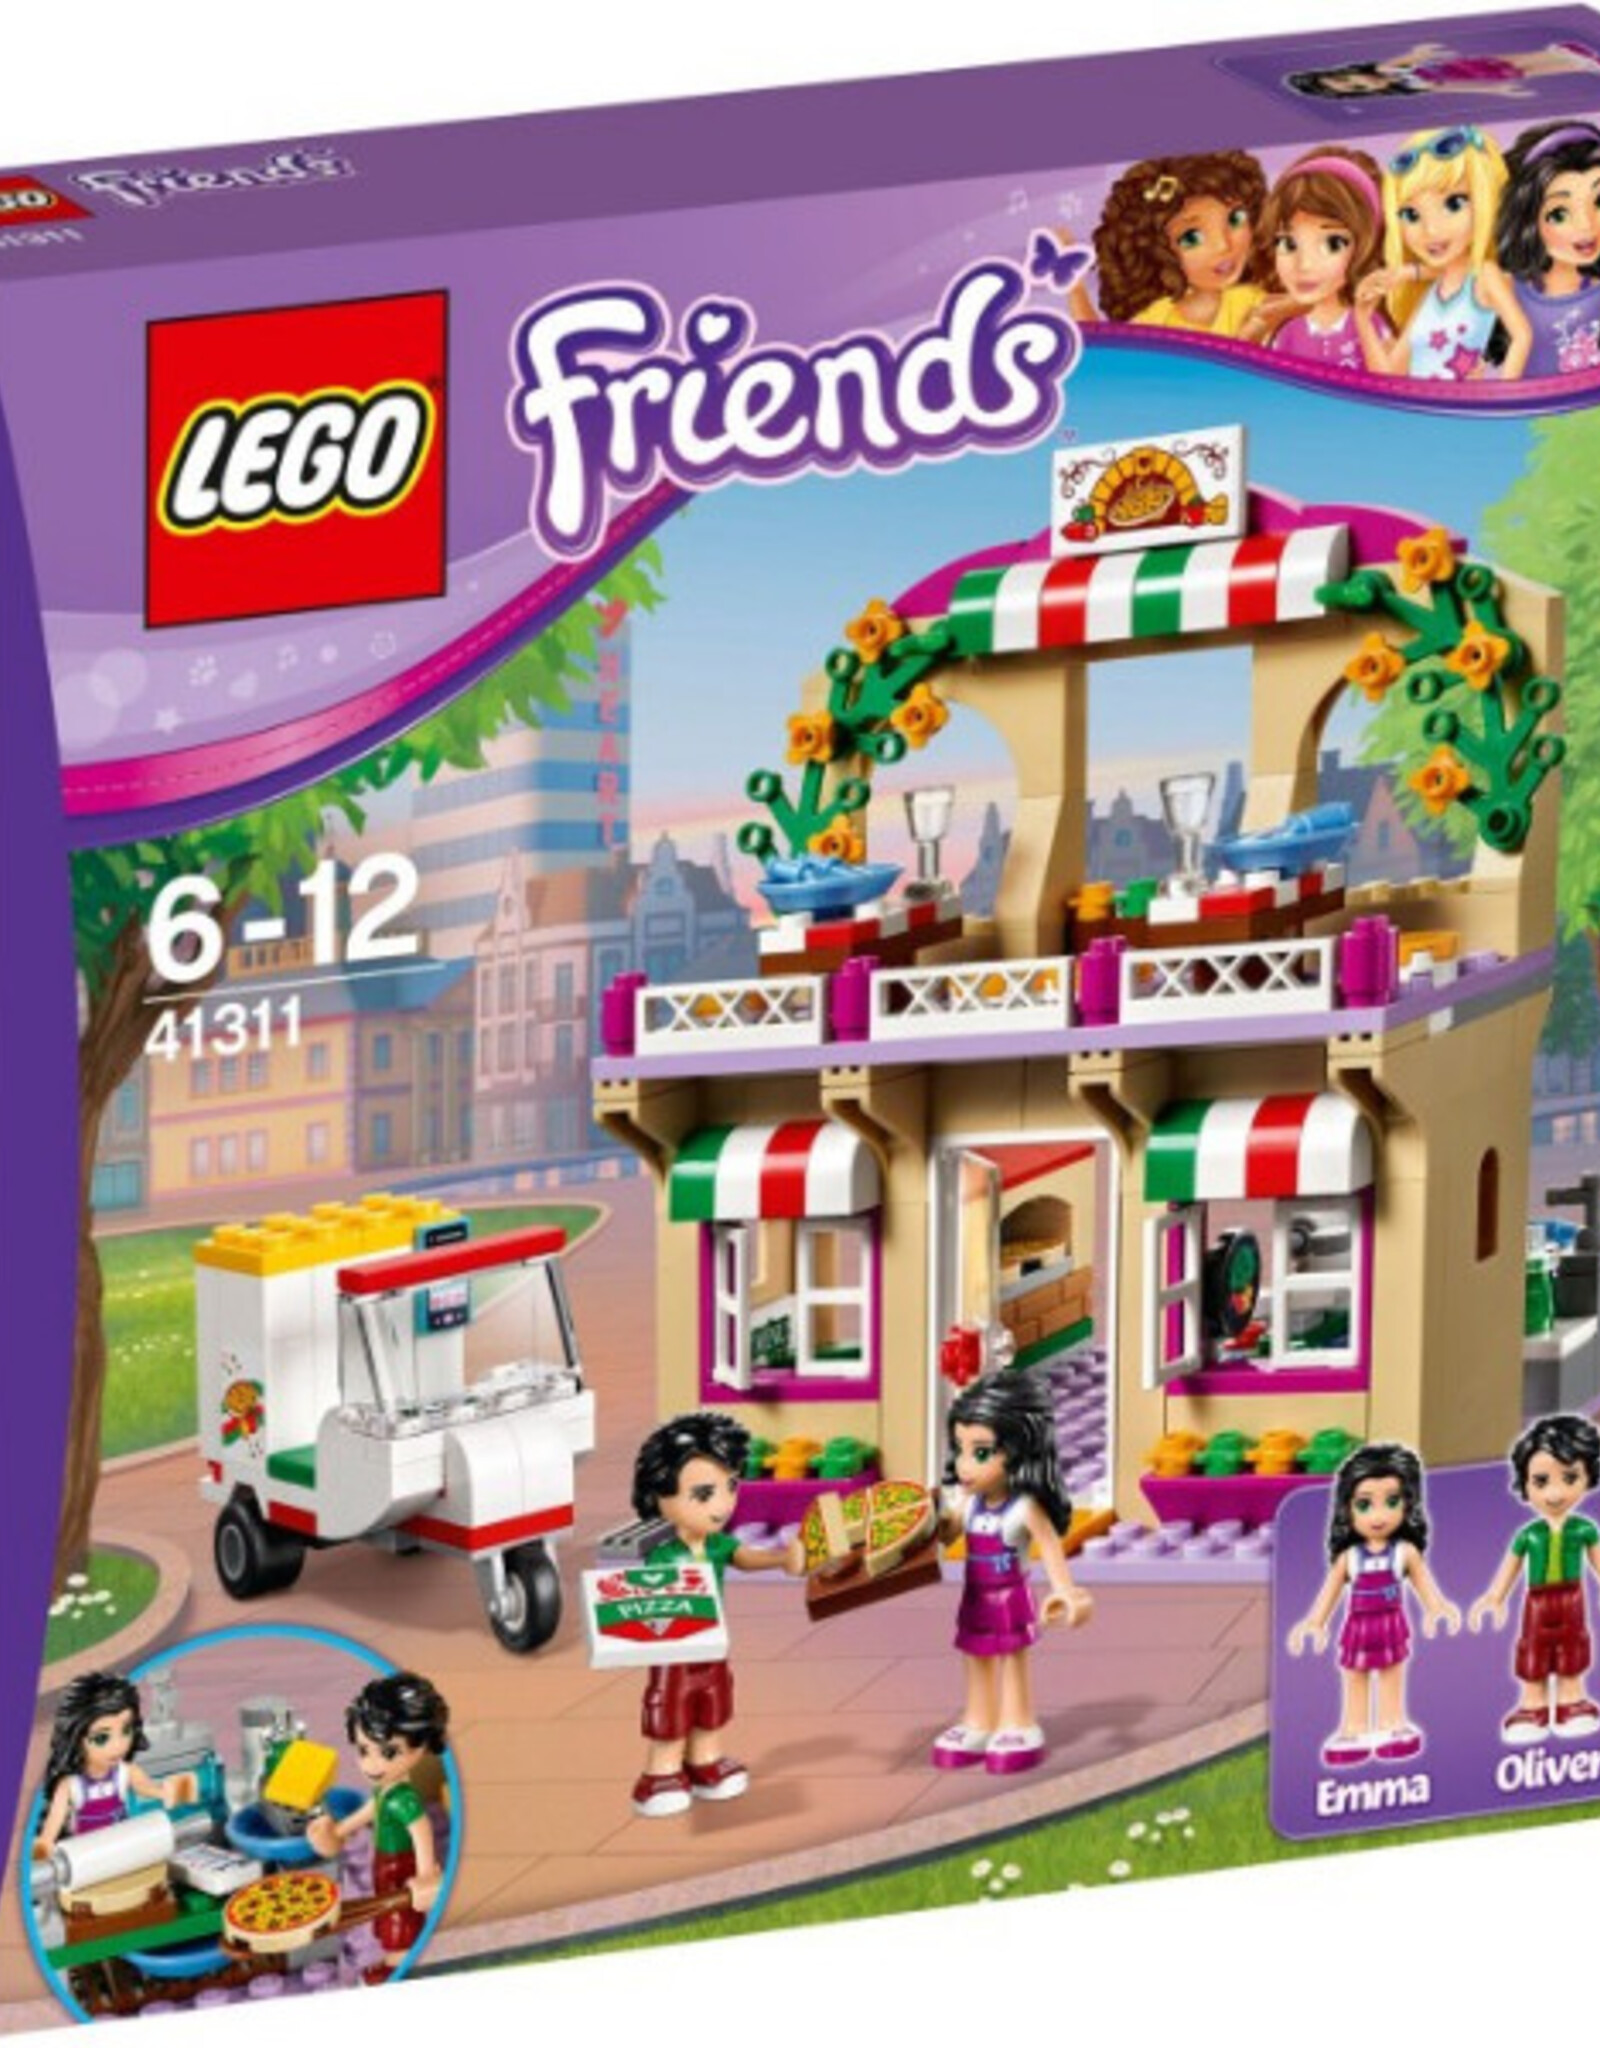 LEGO LEGO 41311 Heartlake Pizzaria FRIENDS